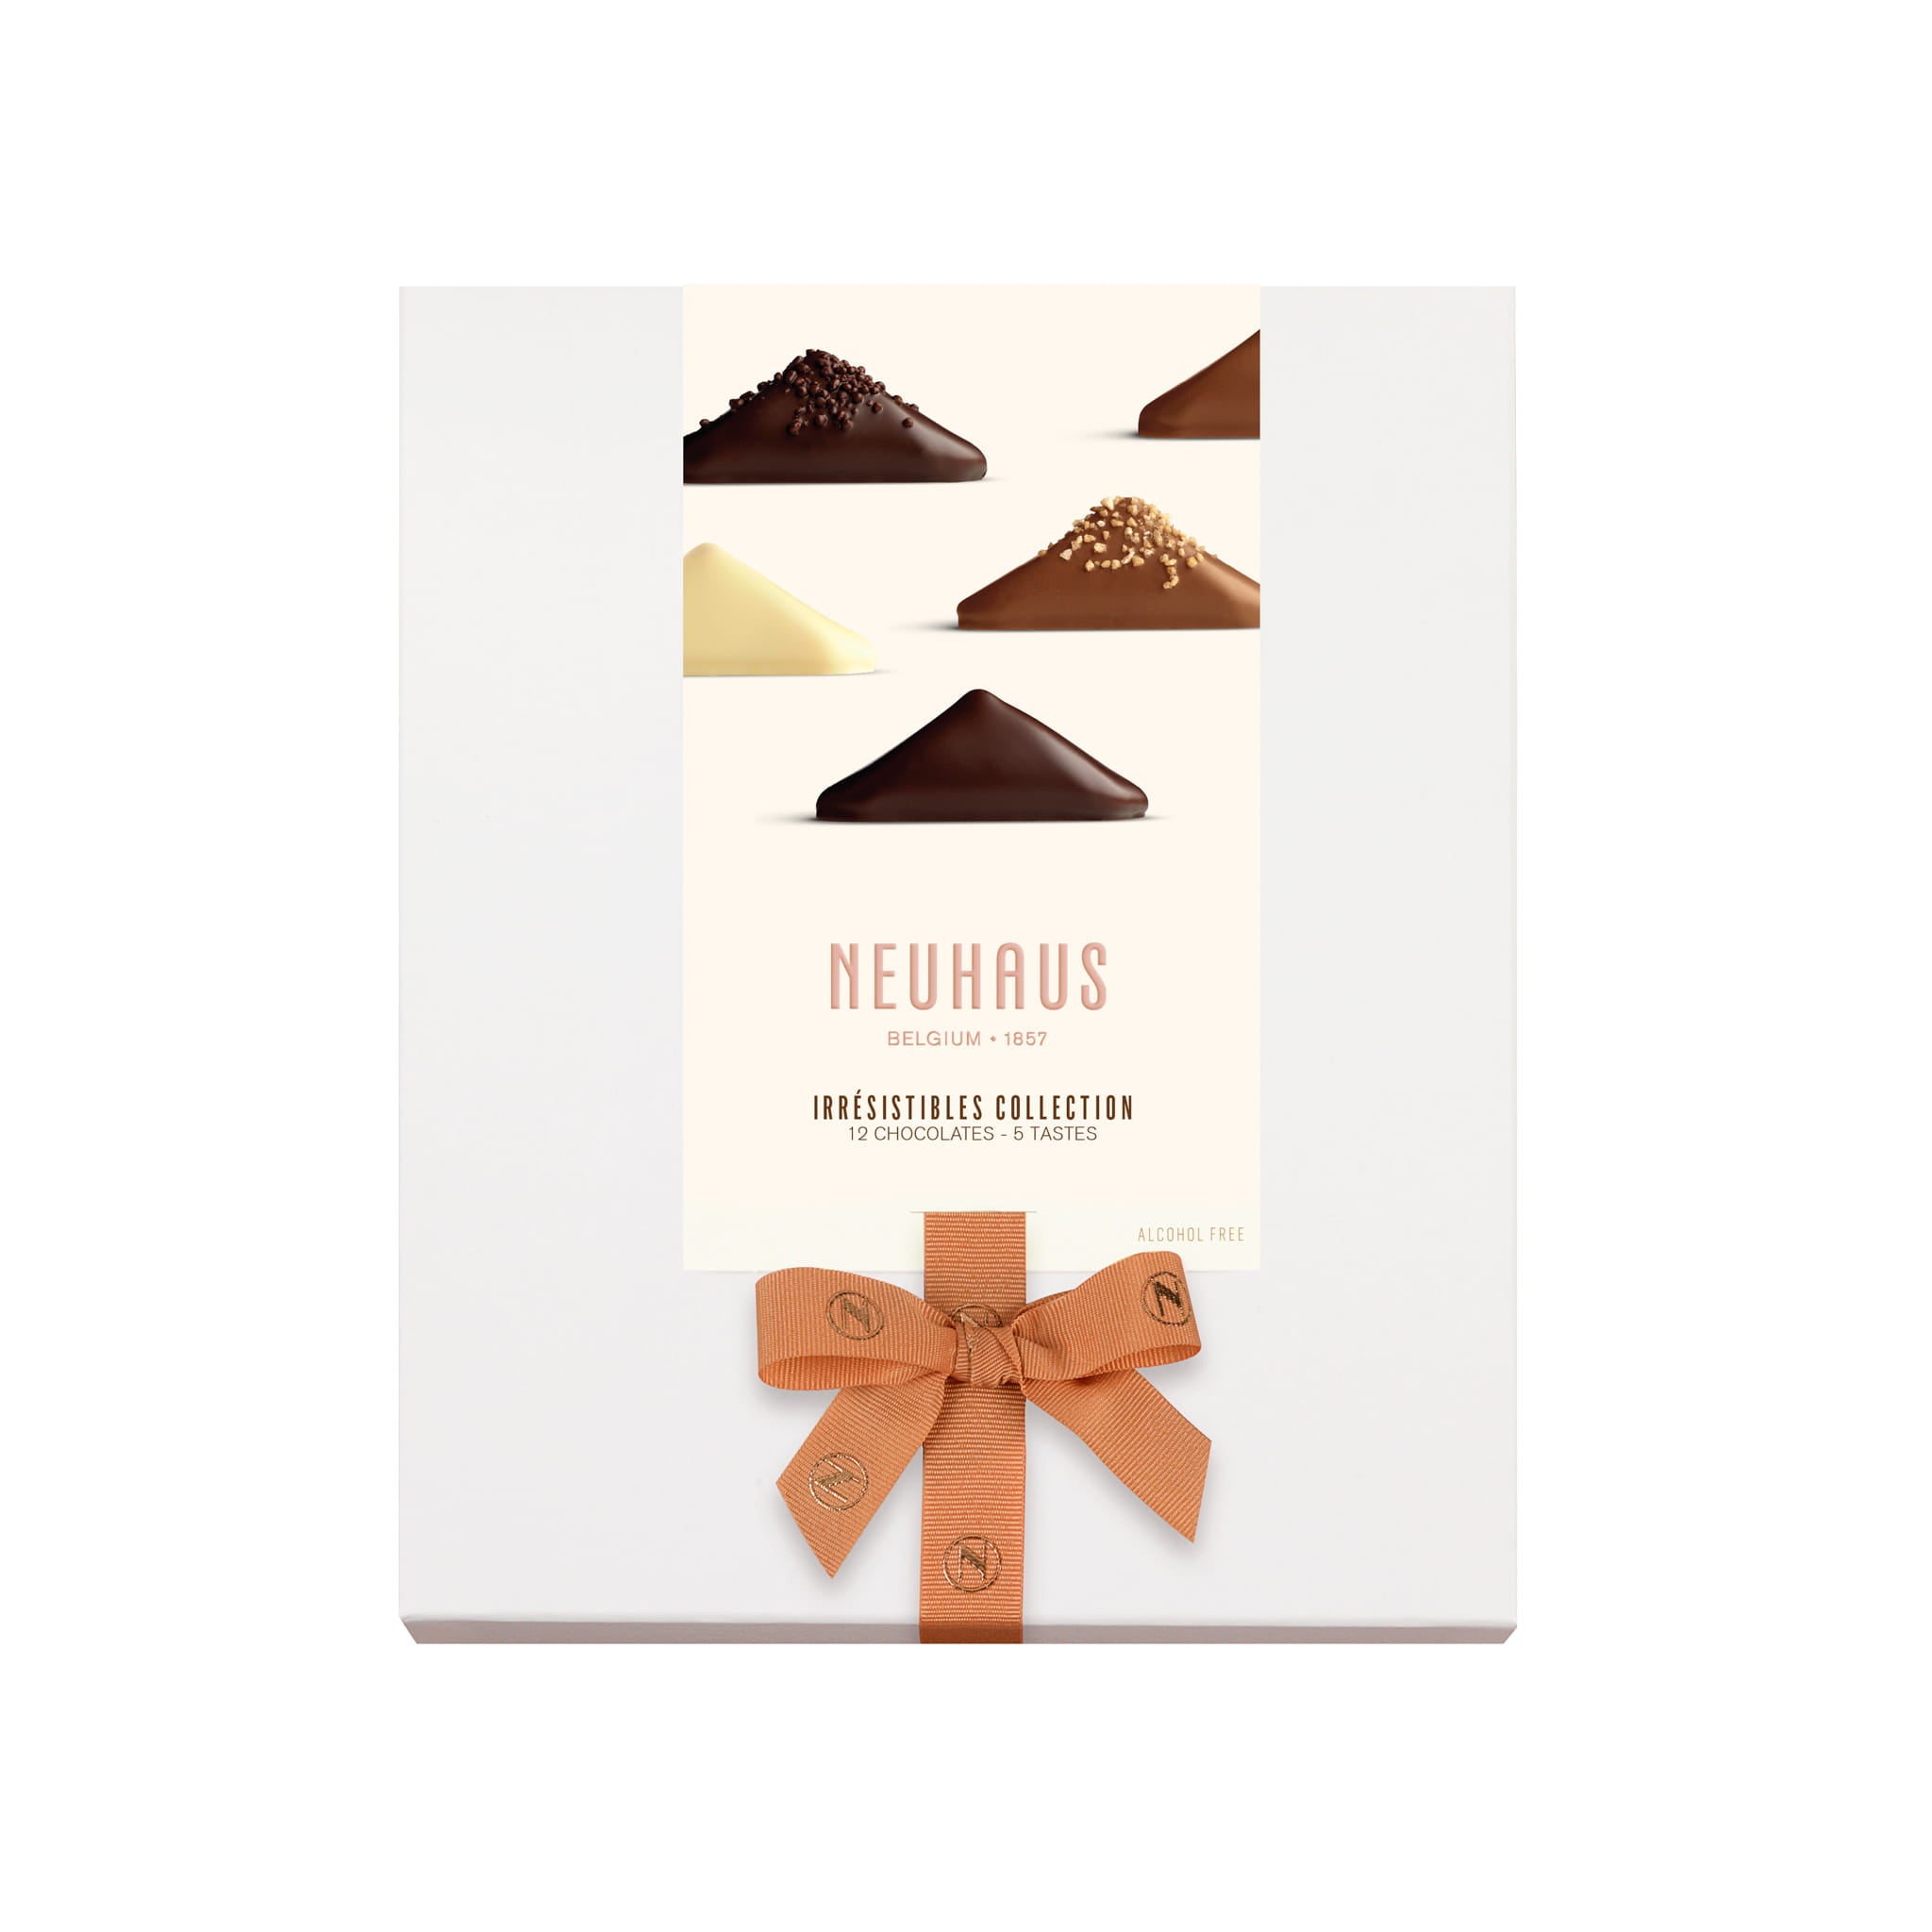 Neuhaus "Irresistibles" Belgian Chocolate Selection 250g top